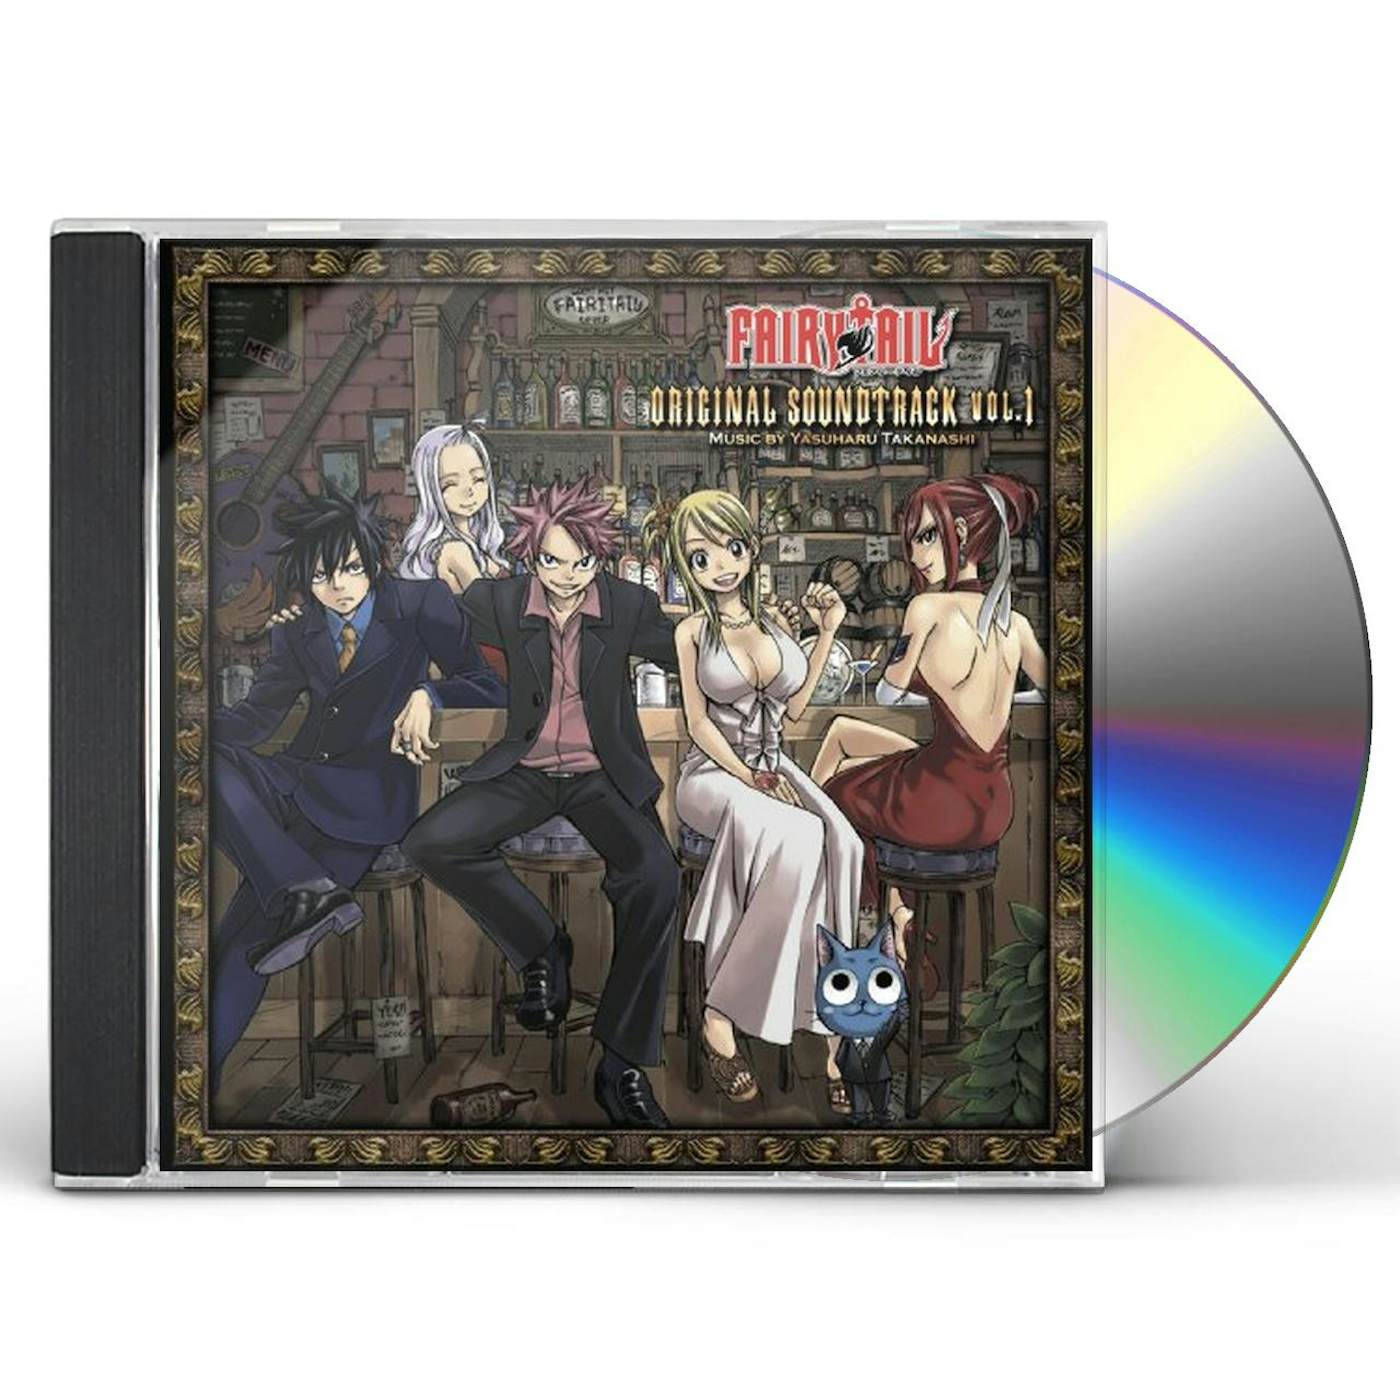 Record of Ragnarok (Original Soundtrack) - Album by Yasuharu